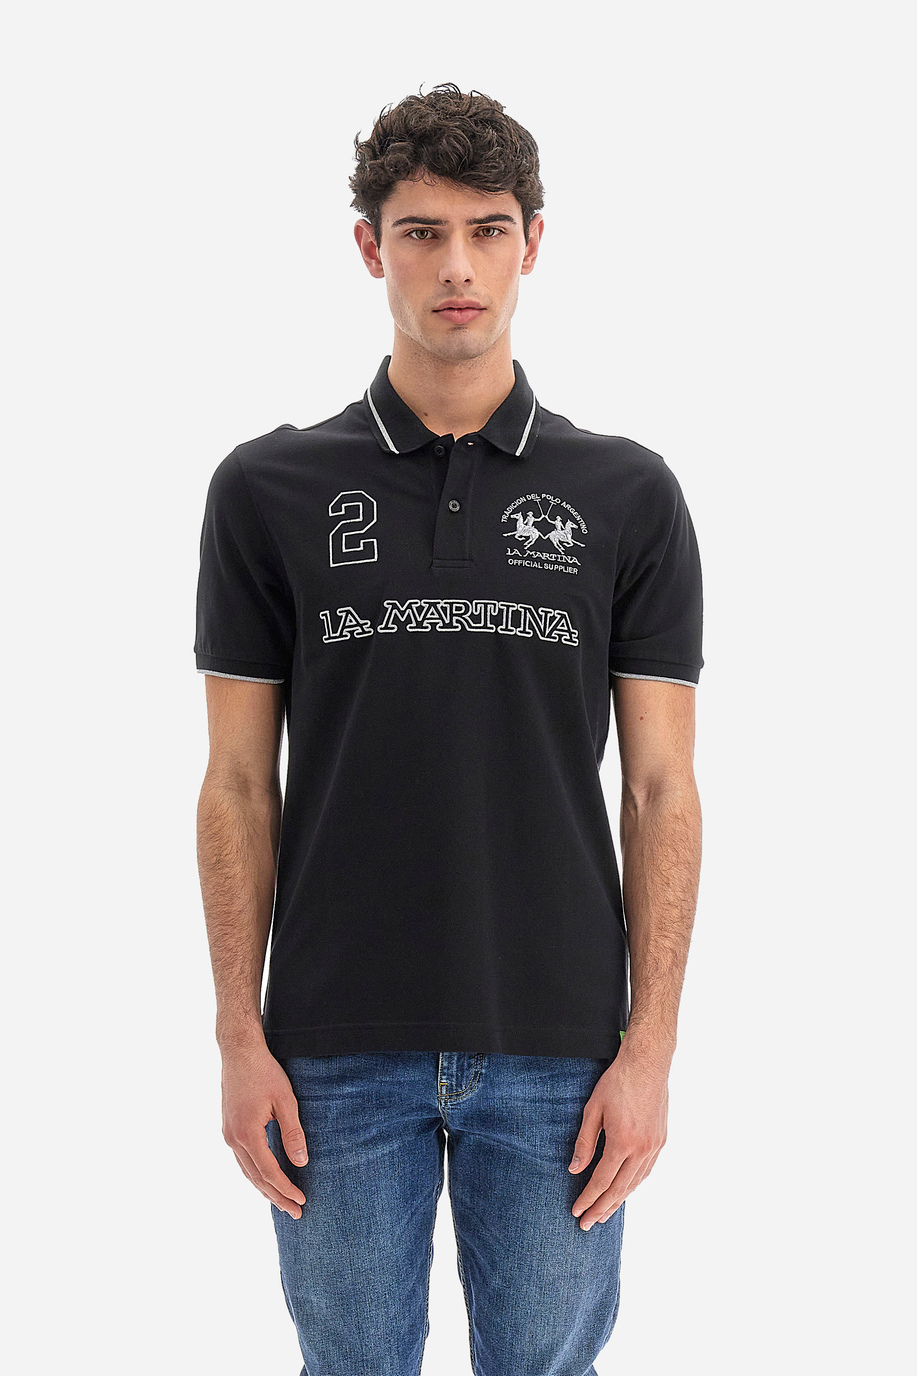 Herren-Kurzarm-Poloshirt aus Stretch-Baumwolle mit normaler Passform - Rosano - Poloshirts | La Martina - Official Online Shop